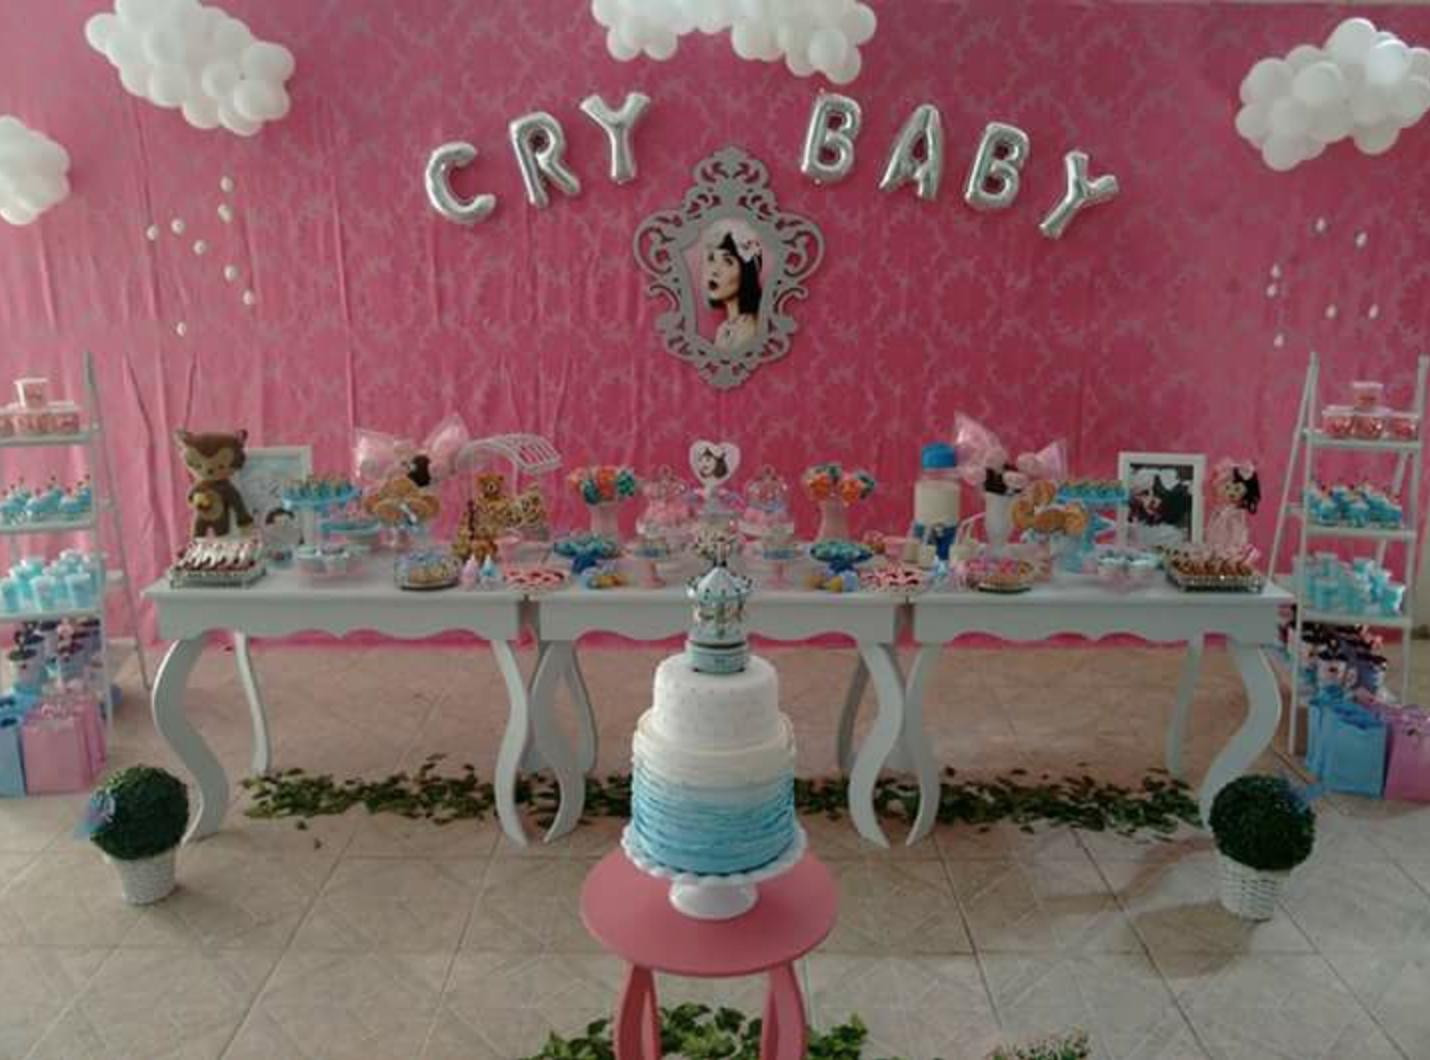 Melanie Martinez Birthday Party Ideas
 This Melanie Martinez Fan Had The ULTIMATE Cry Baby Themed